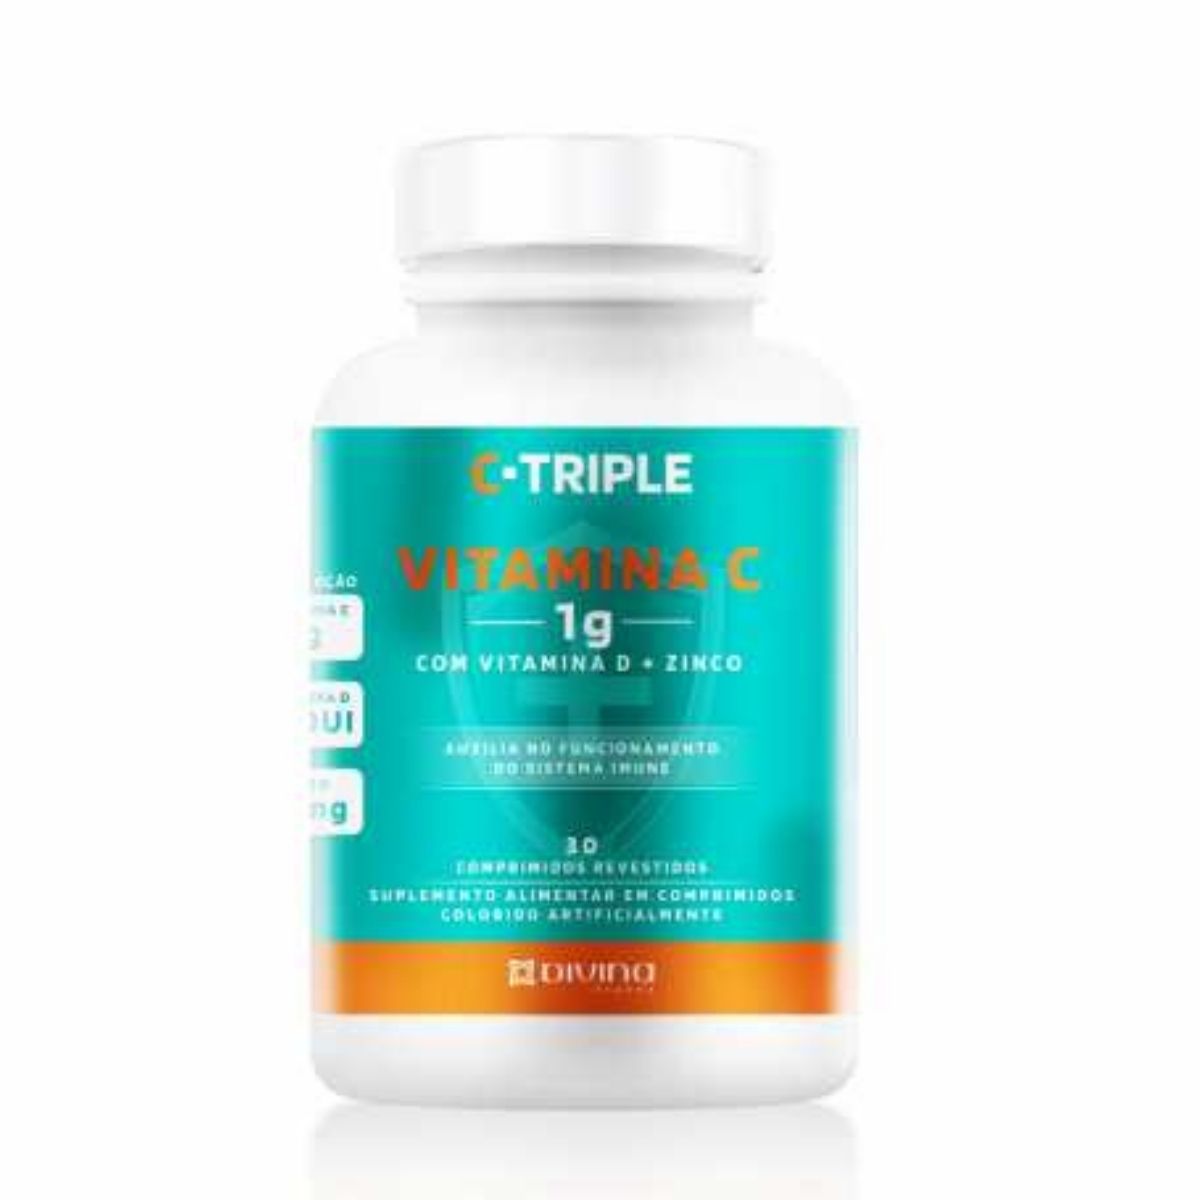 C-Triple 1g Vitamina C com 30 comprimidos